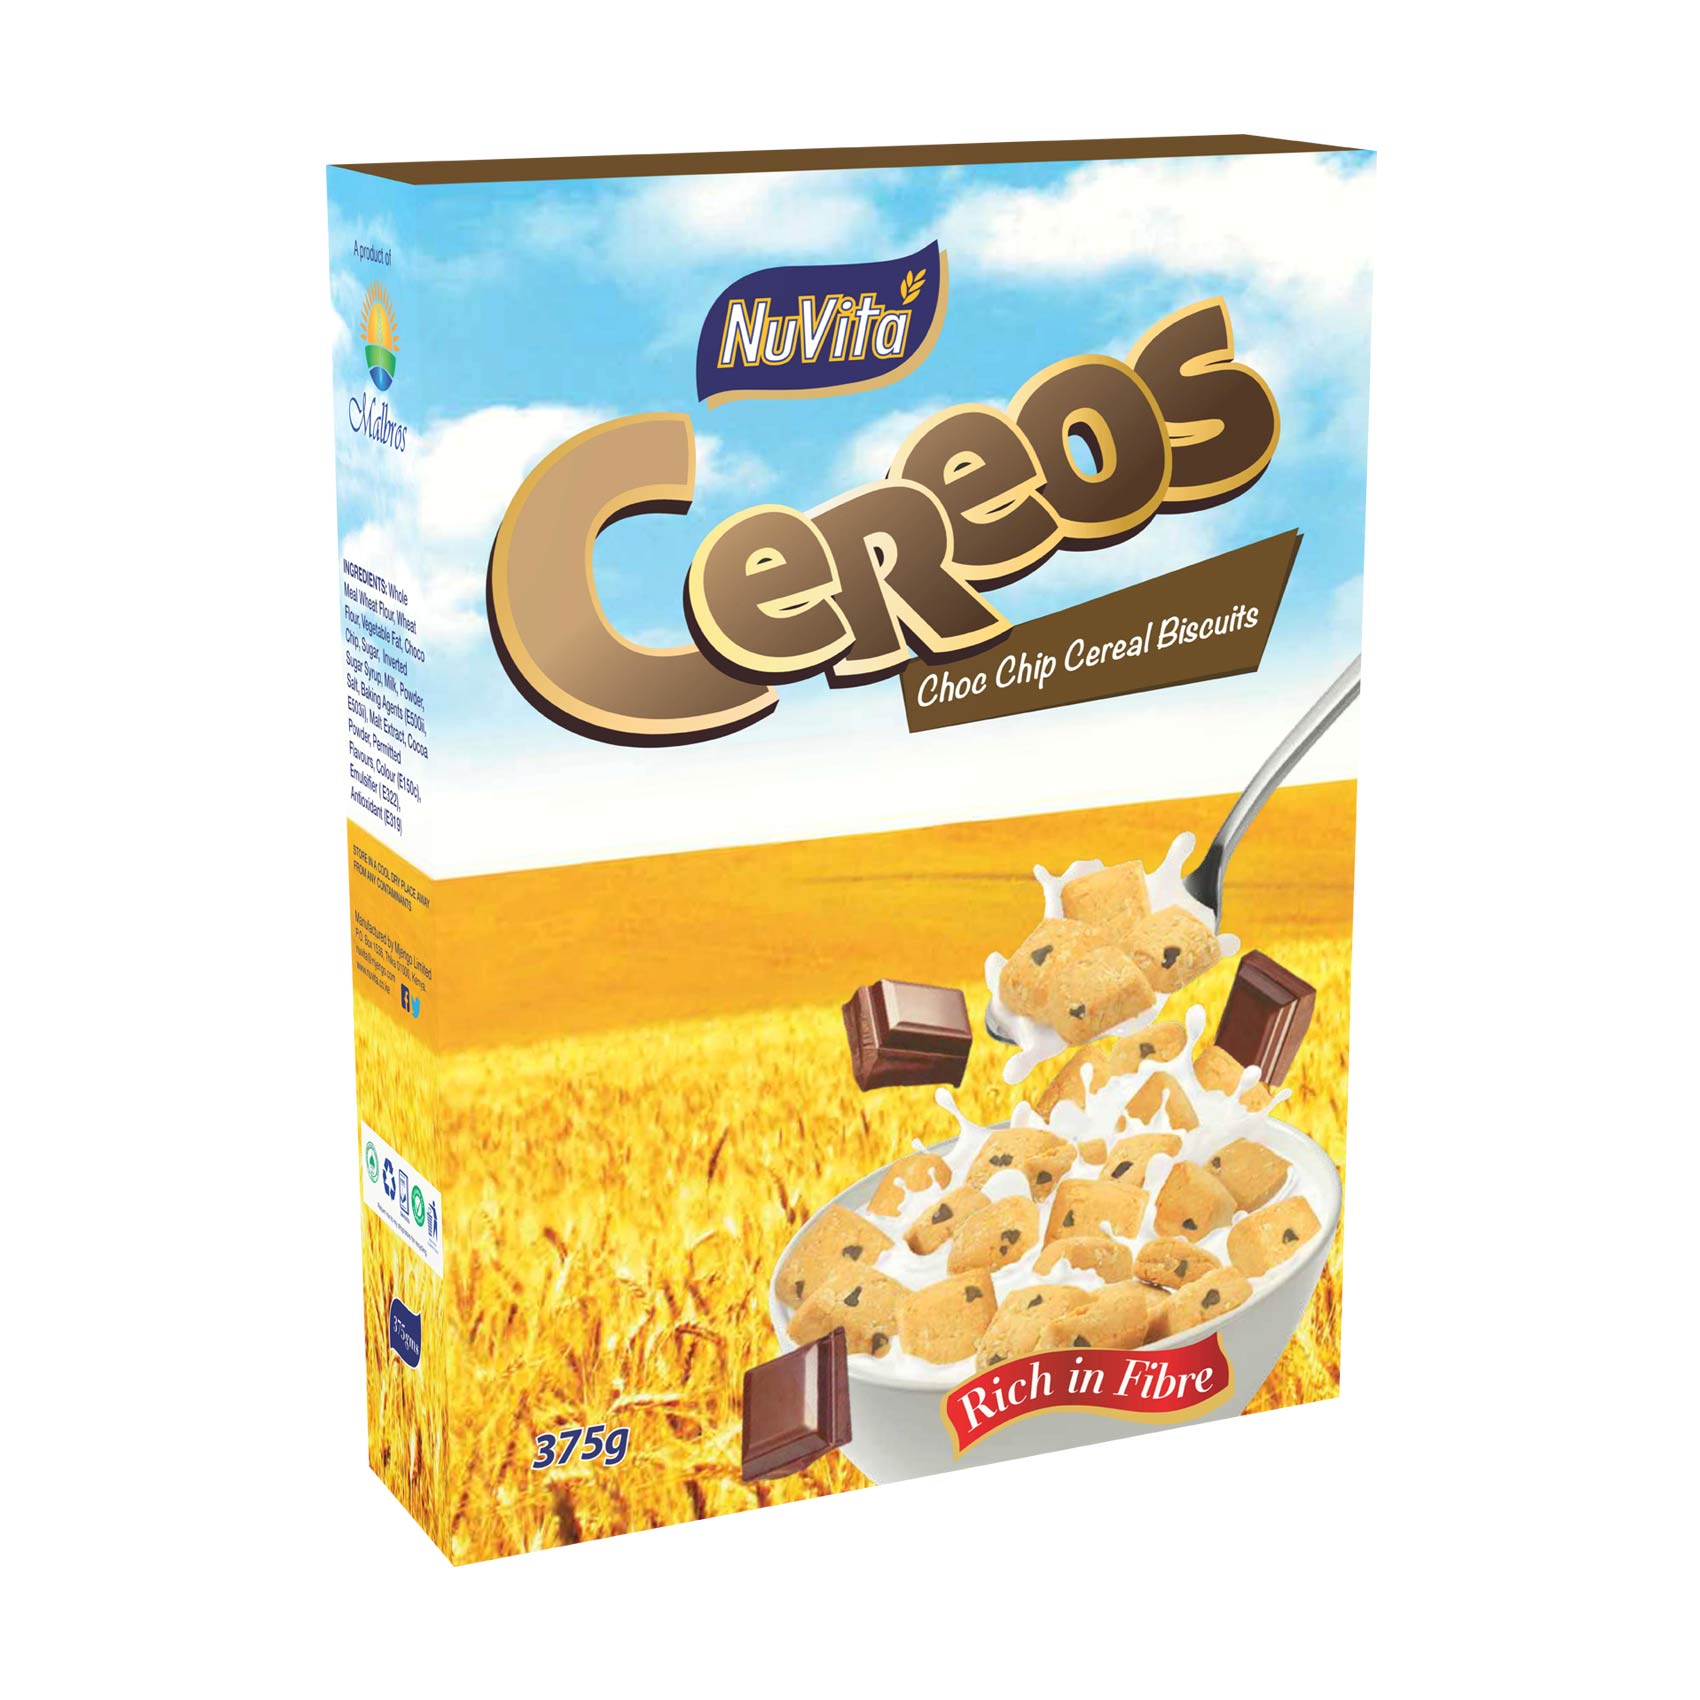 NuVita Cereos Choco Chip Cereal 375g